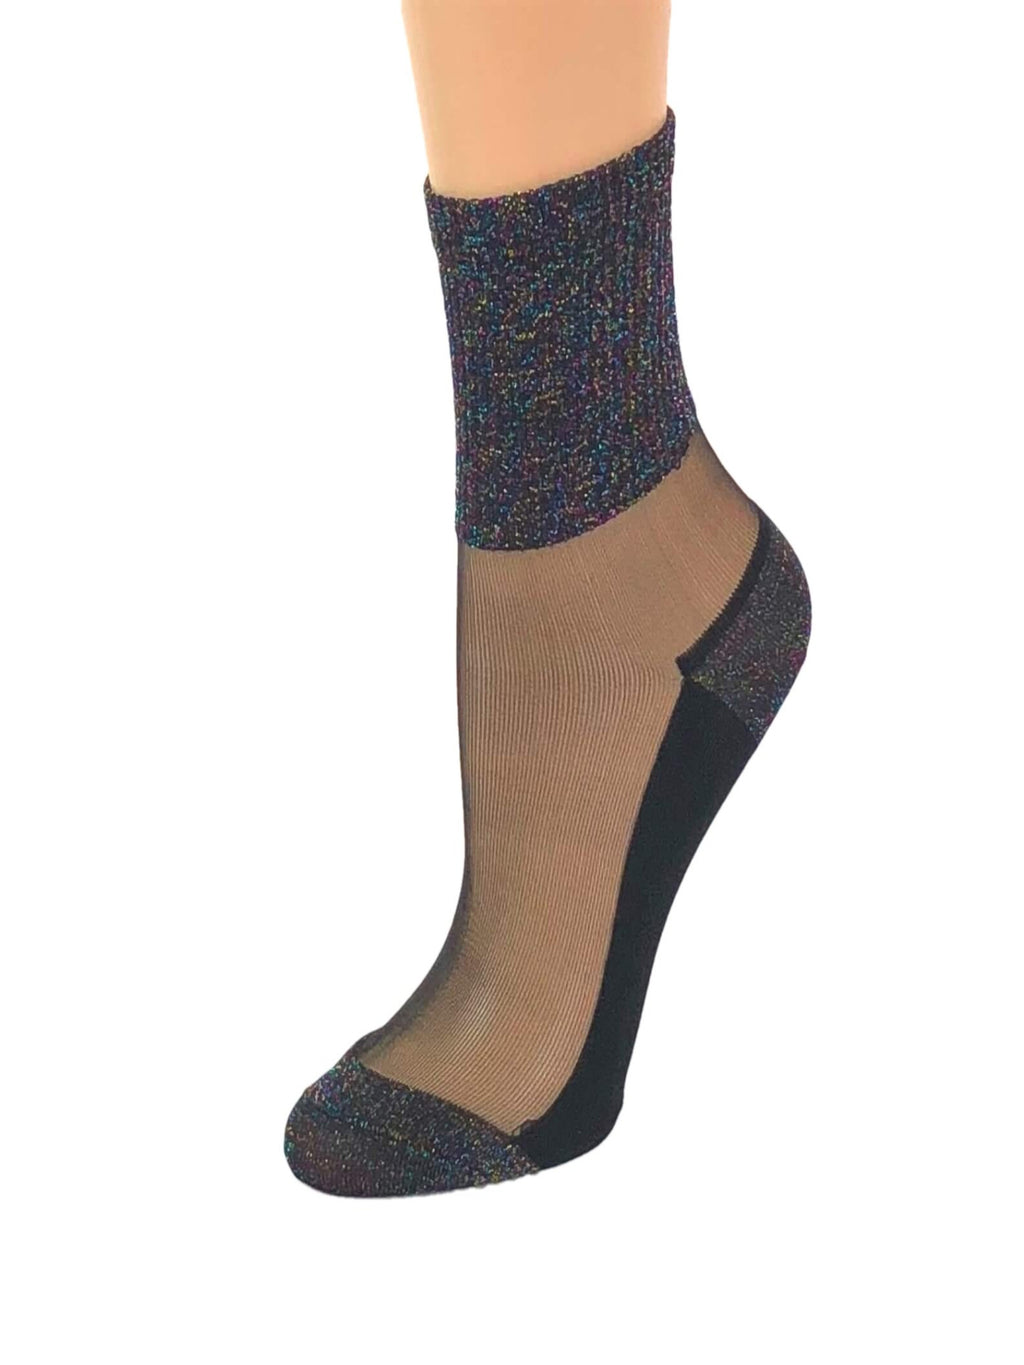 Multi-Coloured Glitter Socks - Global Trendz Fashion®